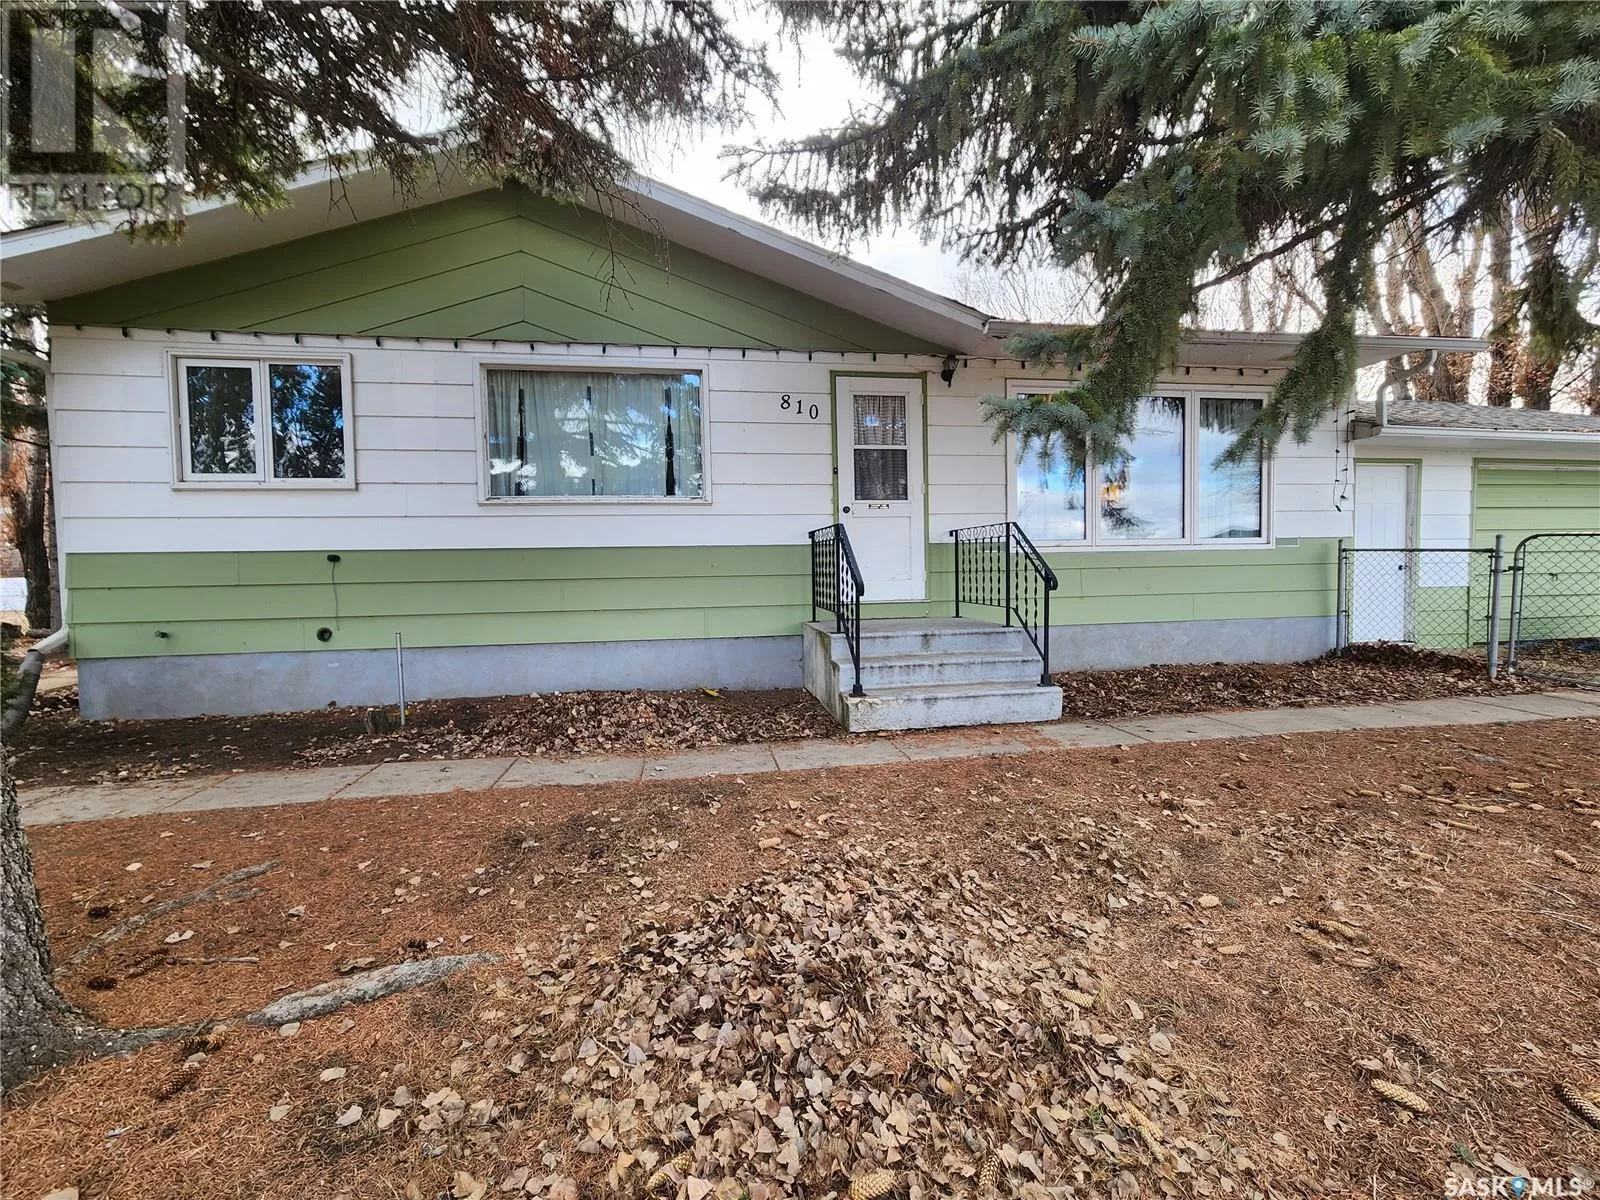 House for rent: 810 Healy Avenue, Radville, Saskatchewan S0C 2G0